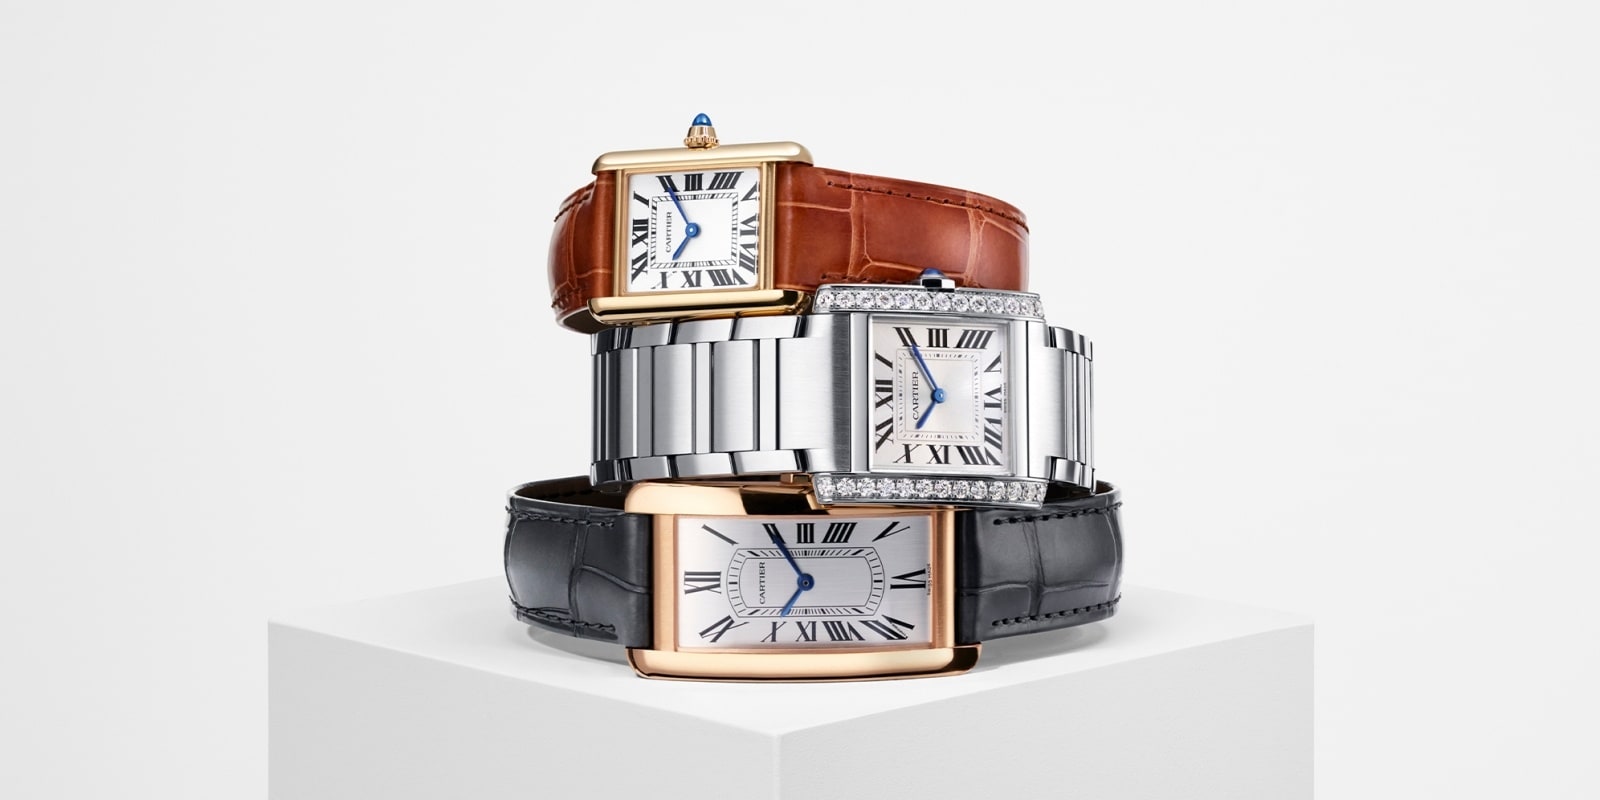 Cartier® Official Website - Jeweller and Watchmaker since 1847